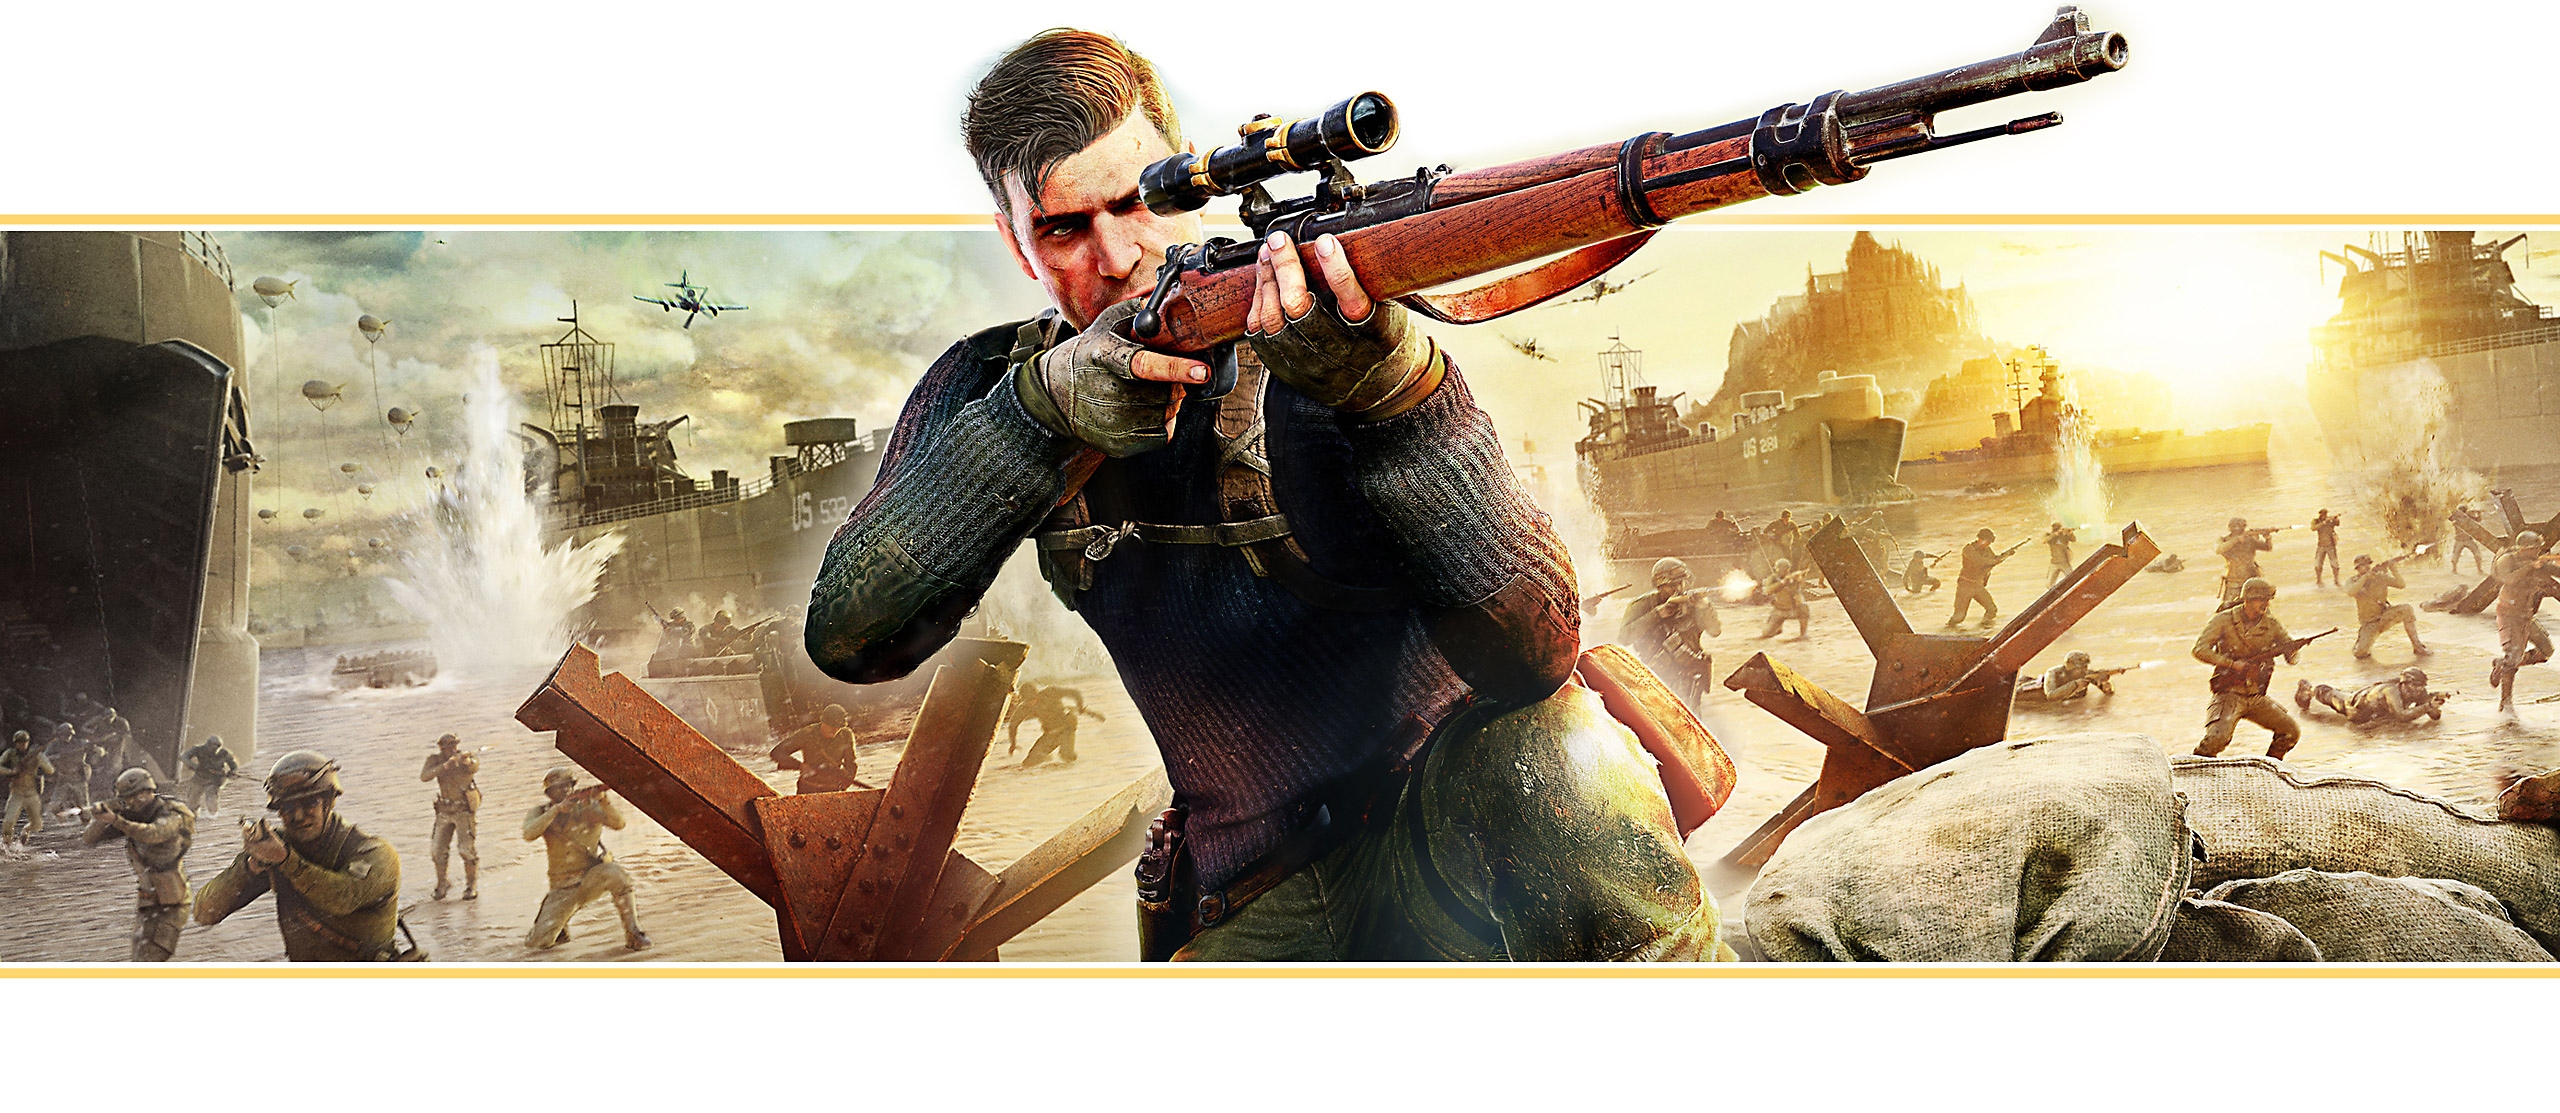 Sniper Elite 5 banner παρουσίασης με βάση εικαστικό από το παιχνίδι. Ο βασικός χαρακτήρας σημαδεύει με ένα όπλο ελεύθερου σκοπευτή